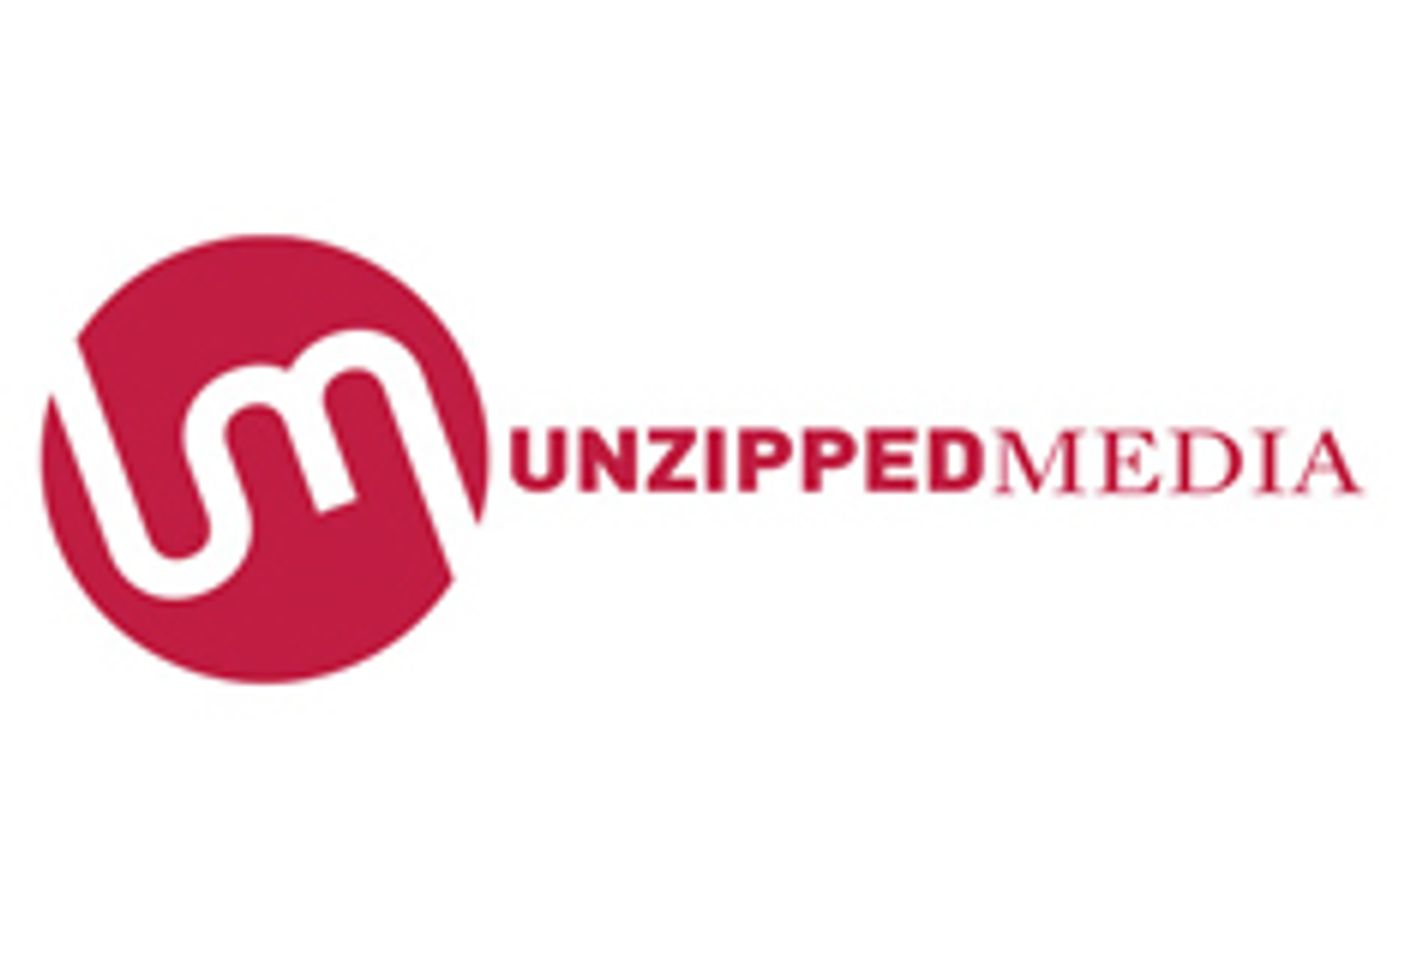 Unzipped Media Becomes ASACP Corporate Sponsor